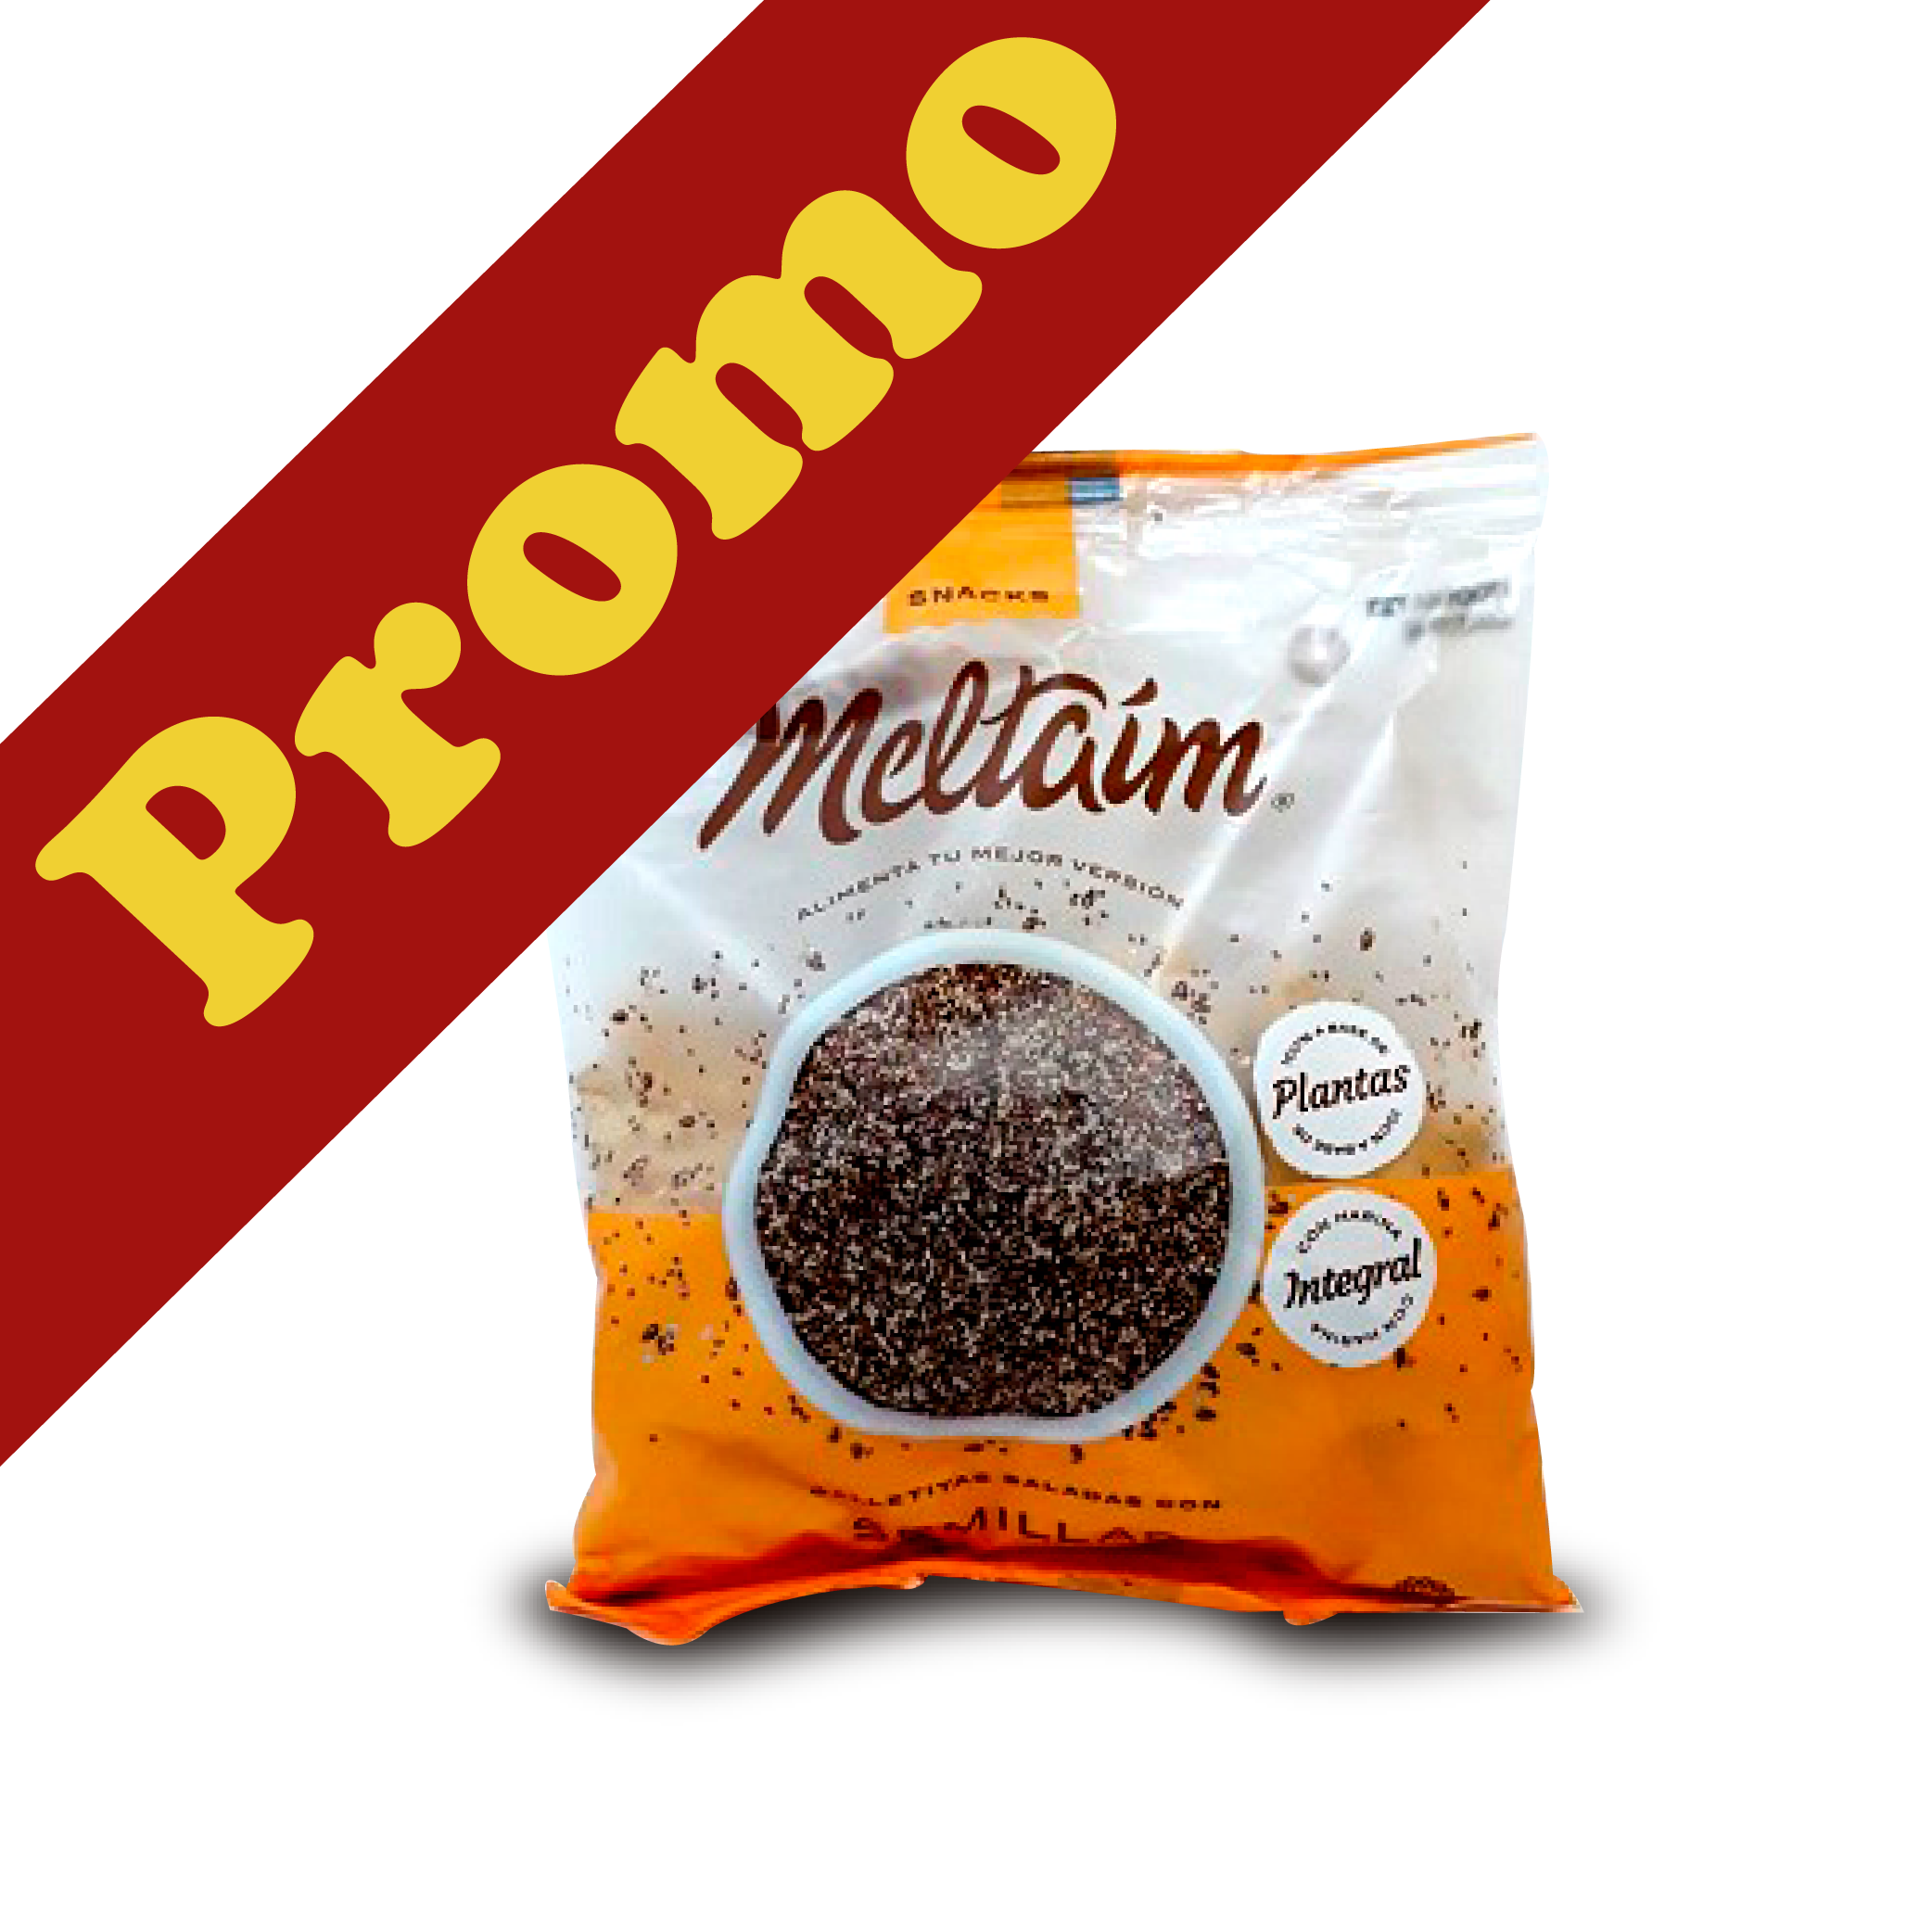 Meltaim - Snack C/ Semillas PROMO 2 x 150gr